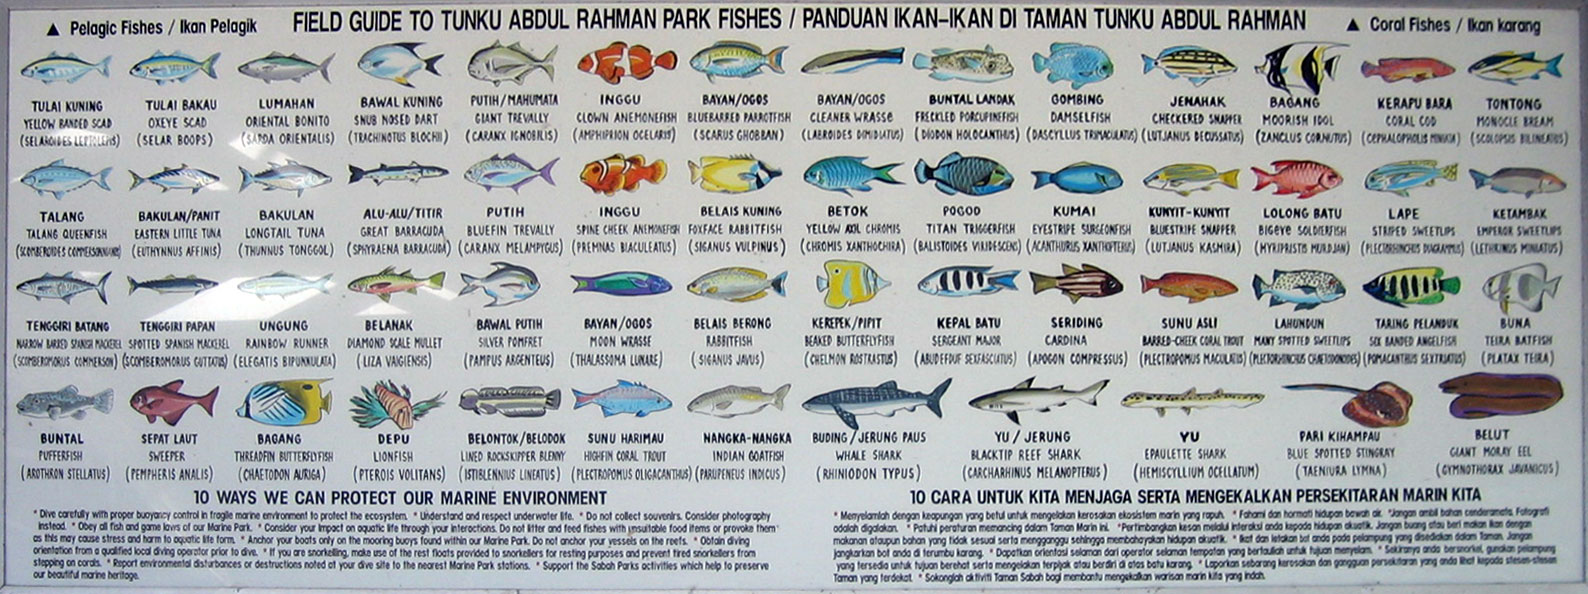 Морская рыба список с названиями и фото